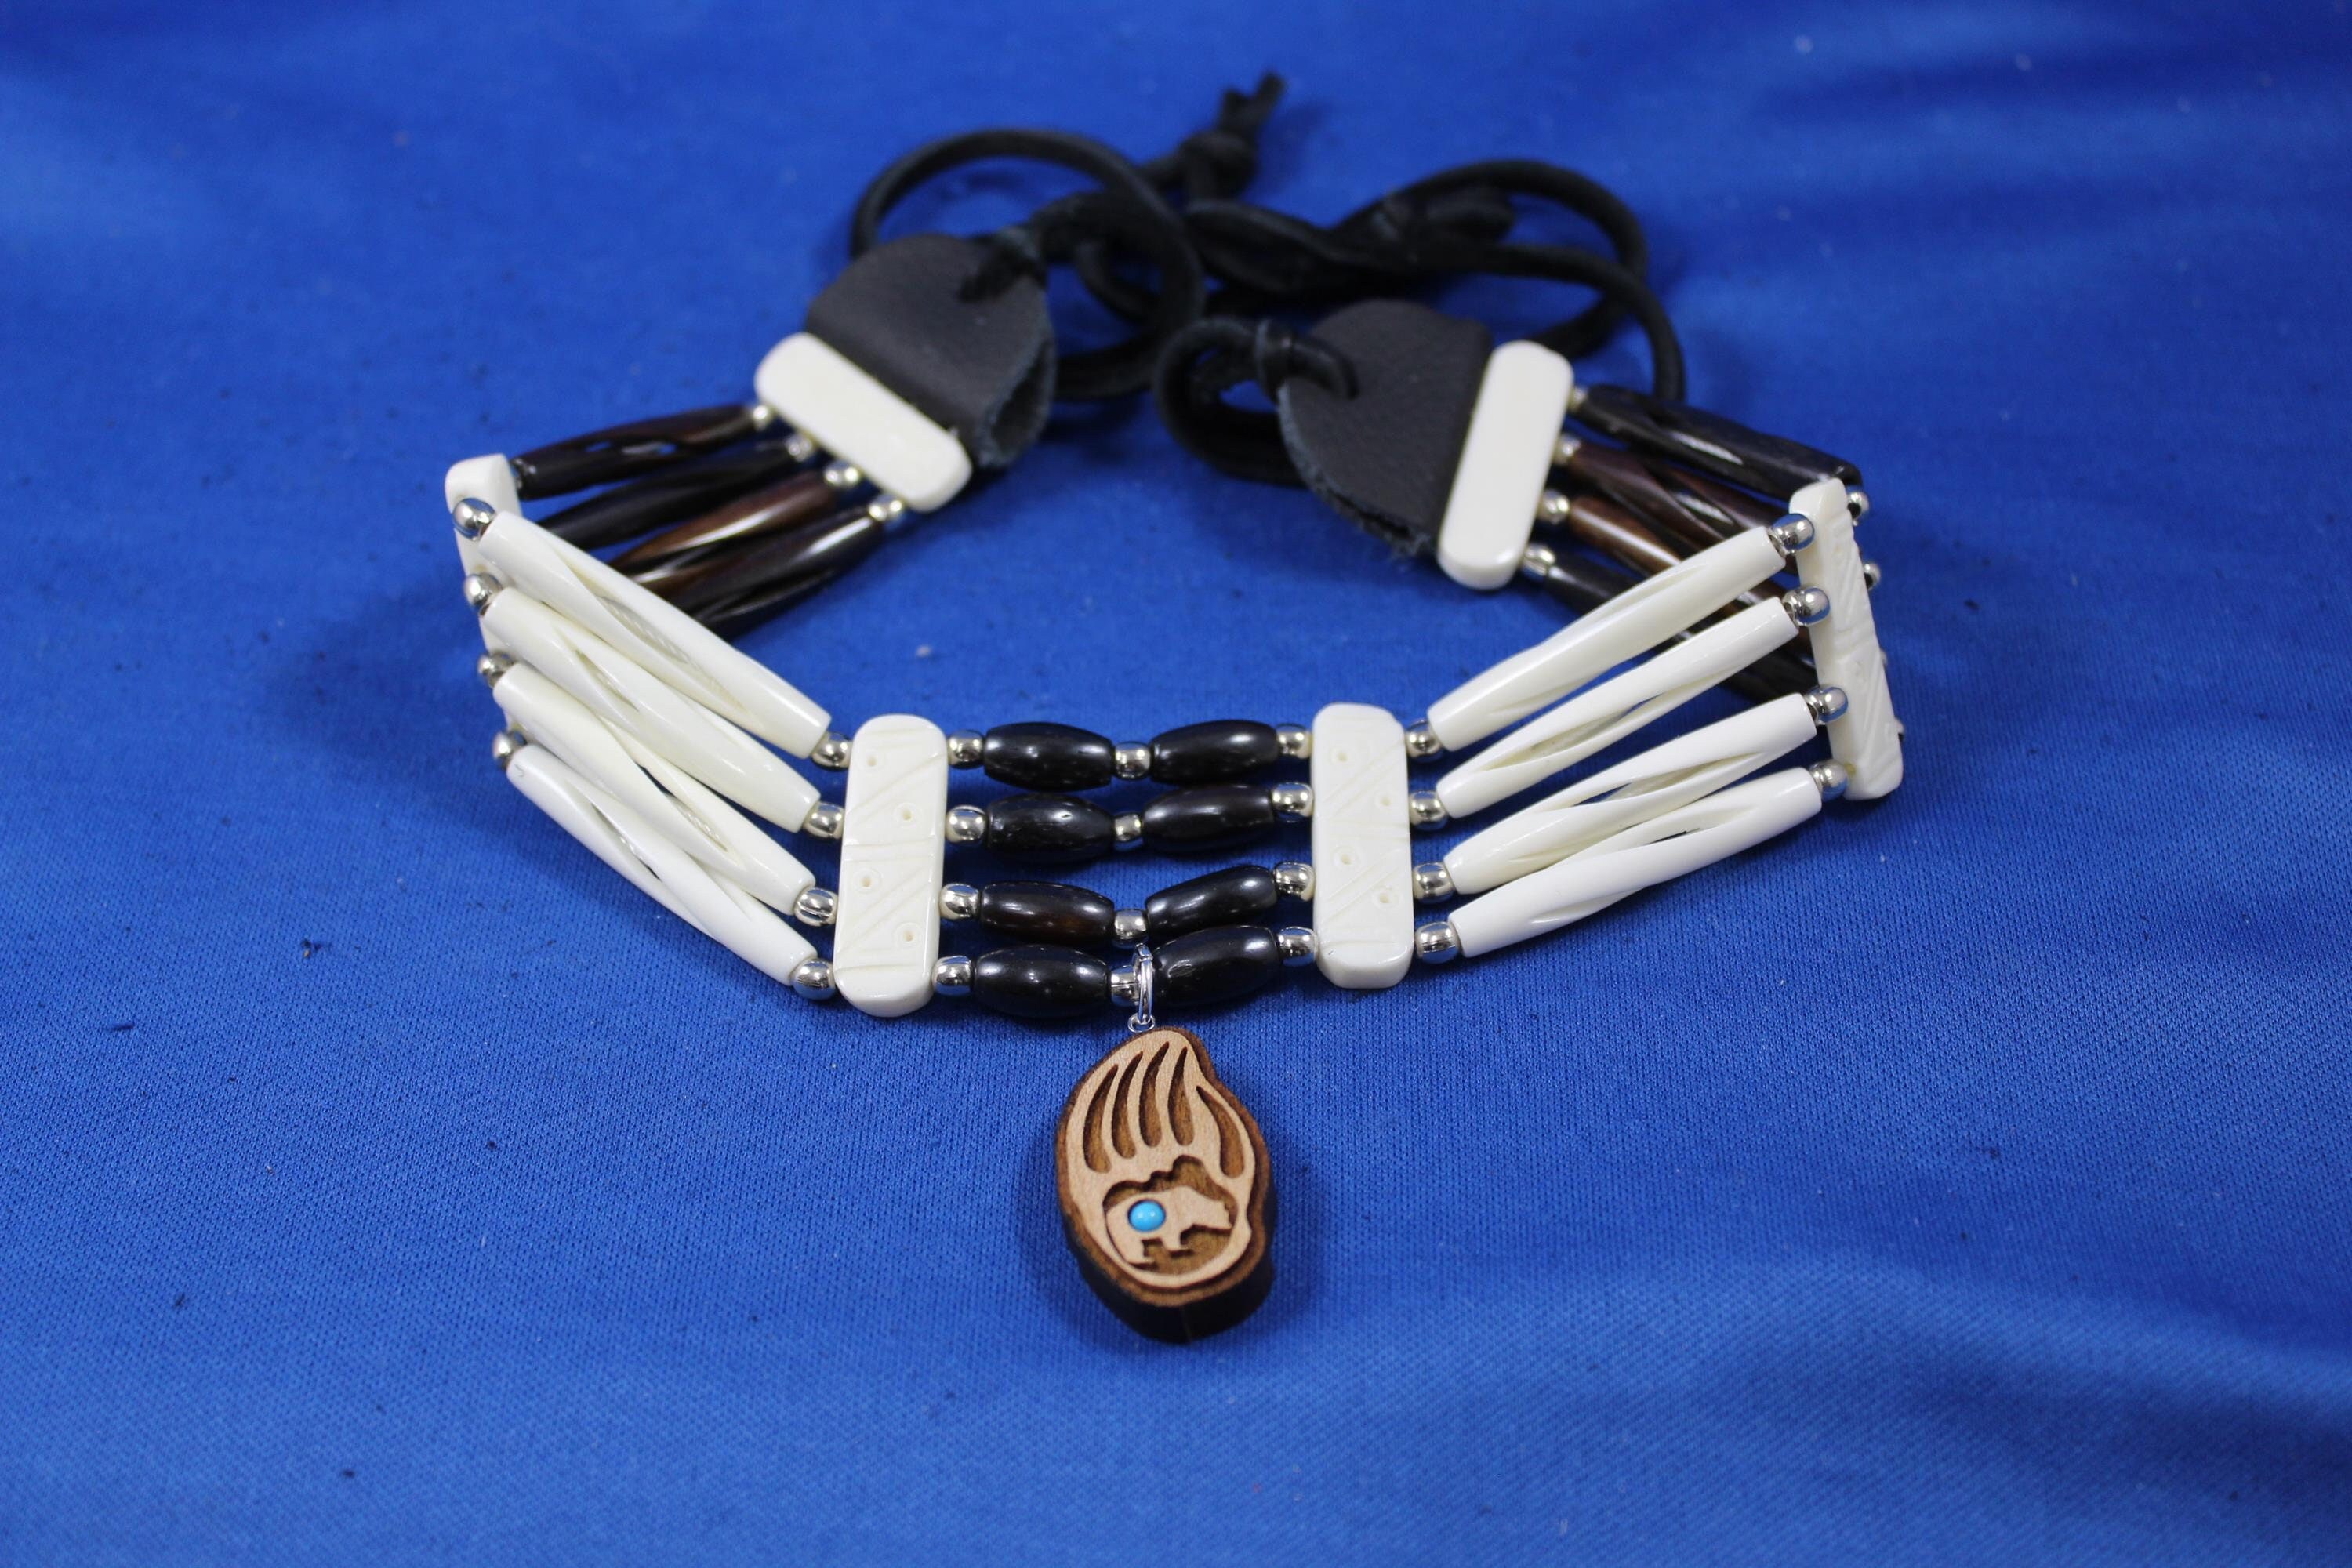 Native Style Adjustable Bone Choker Necklaces